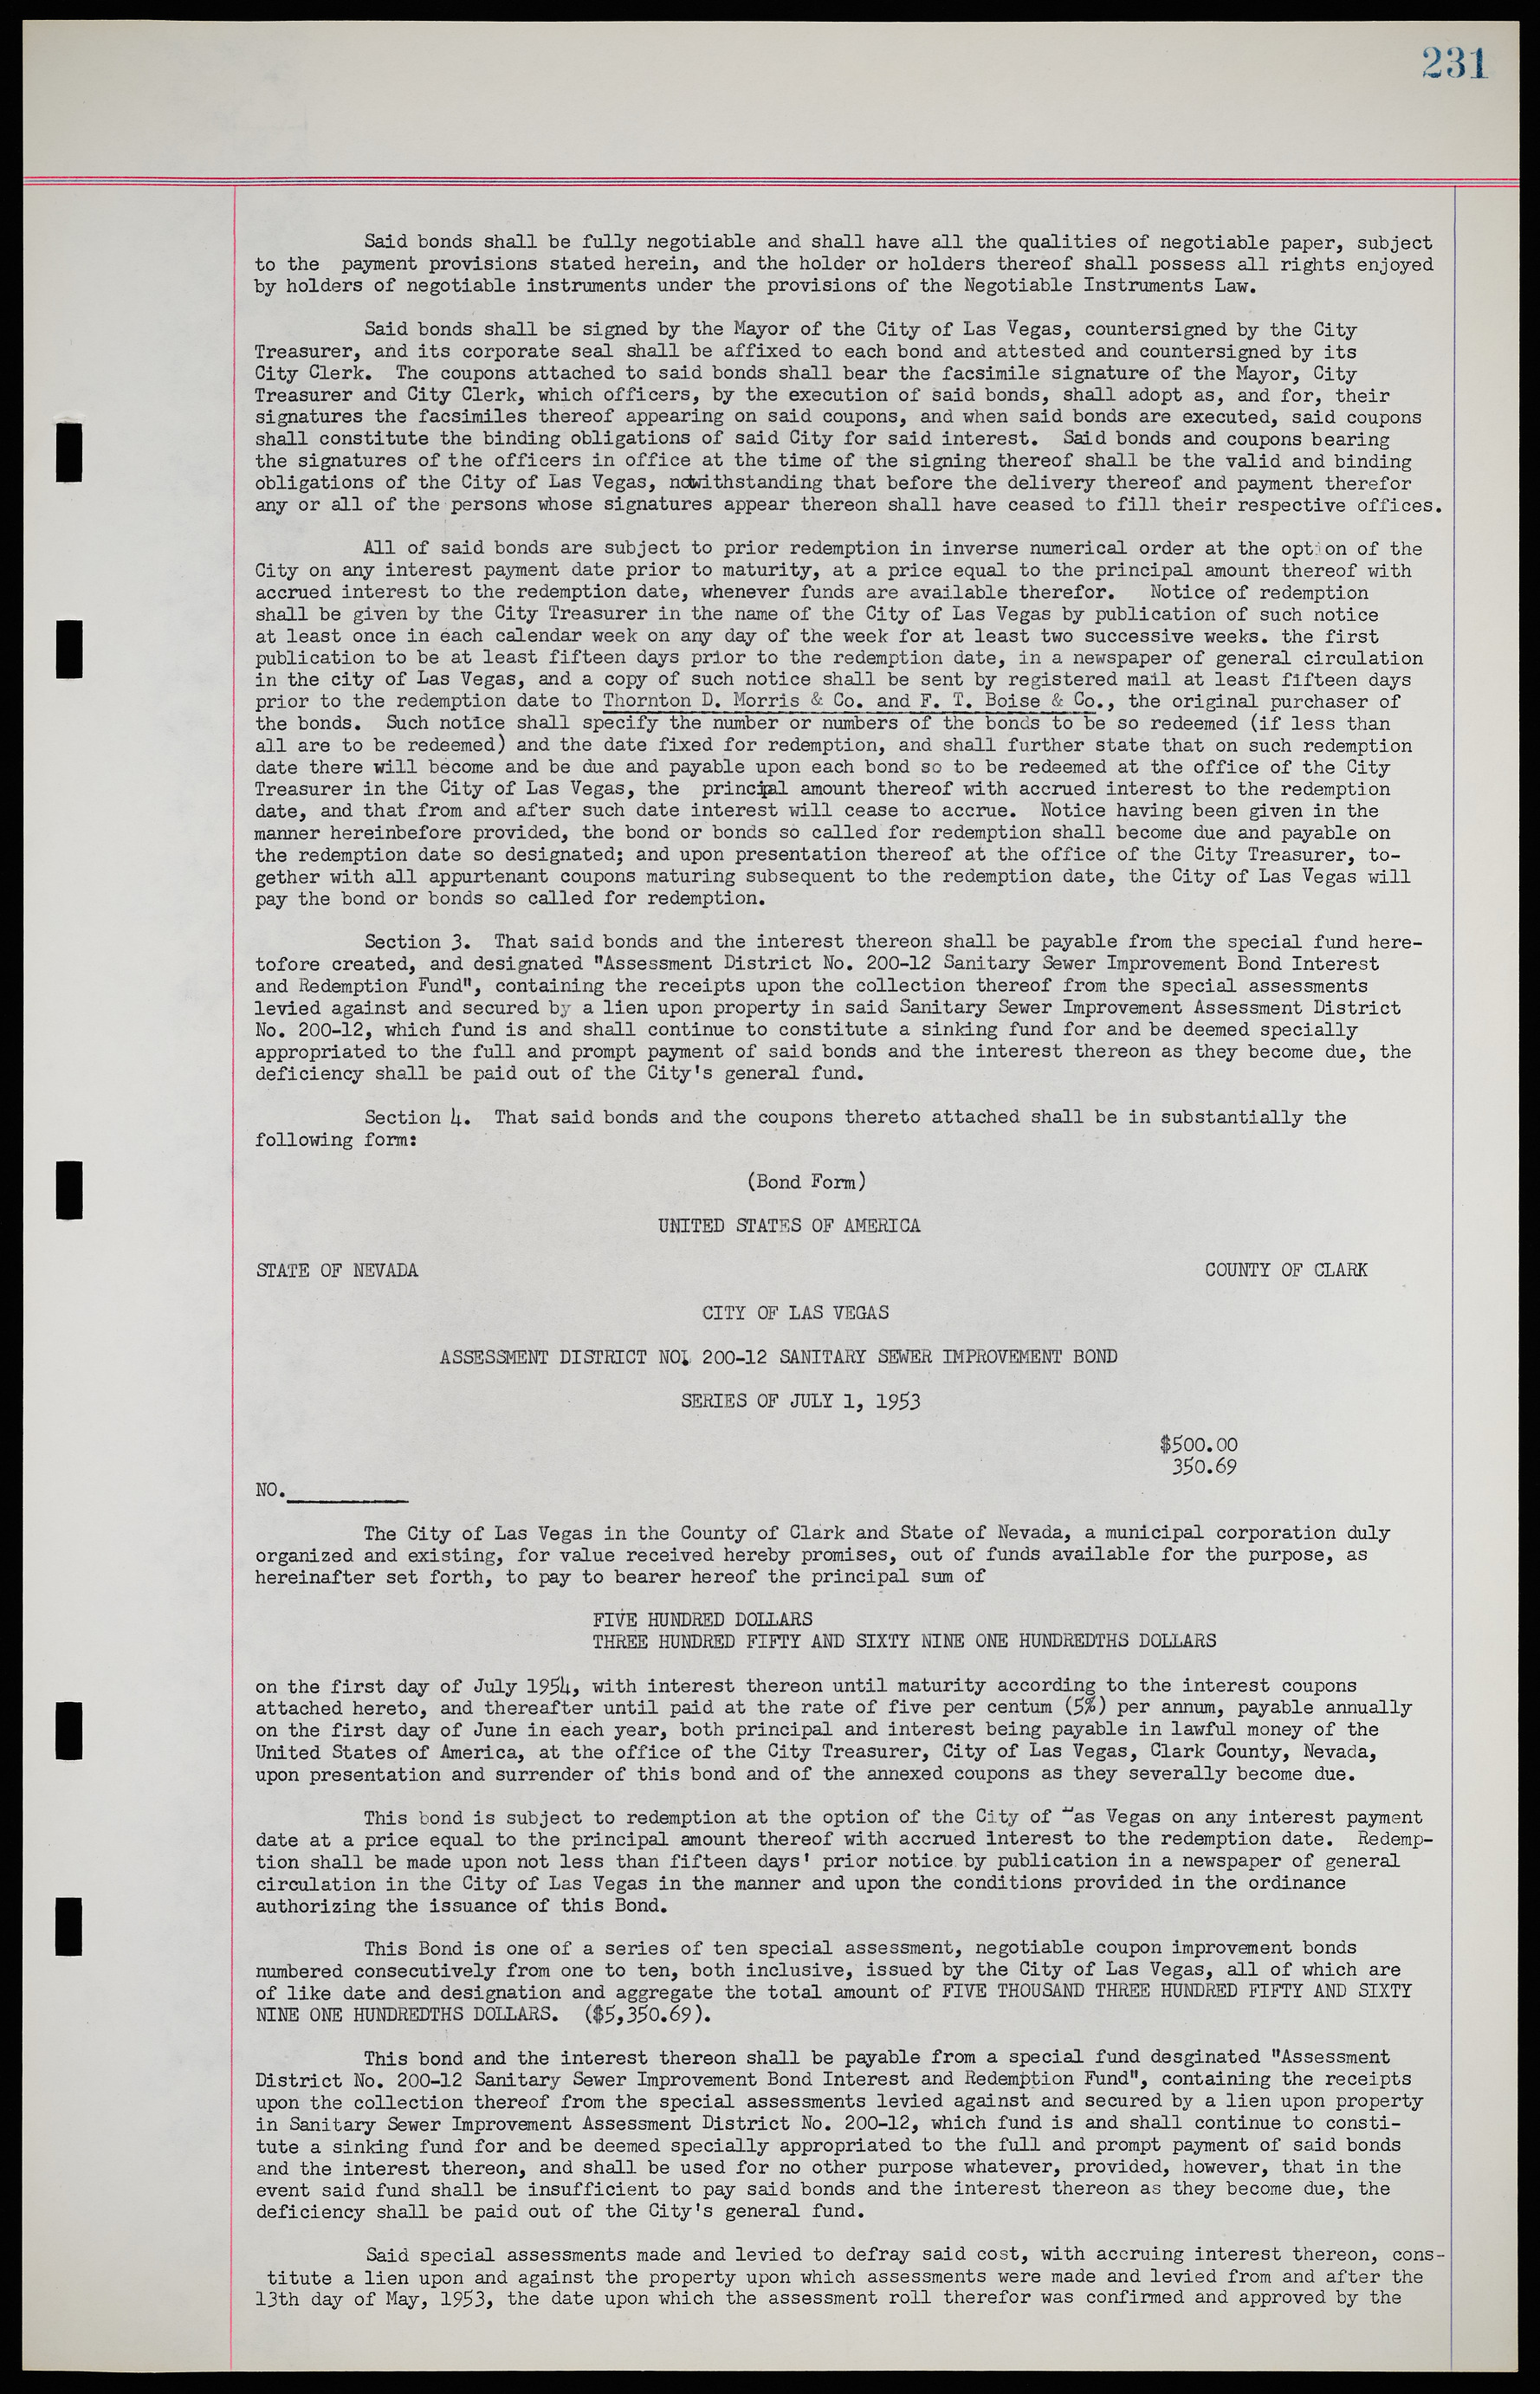 Las Vegas City Ordinances, November 13, 1950 to August 6, 1958, lvc000015-239